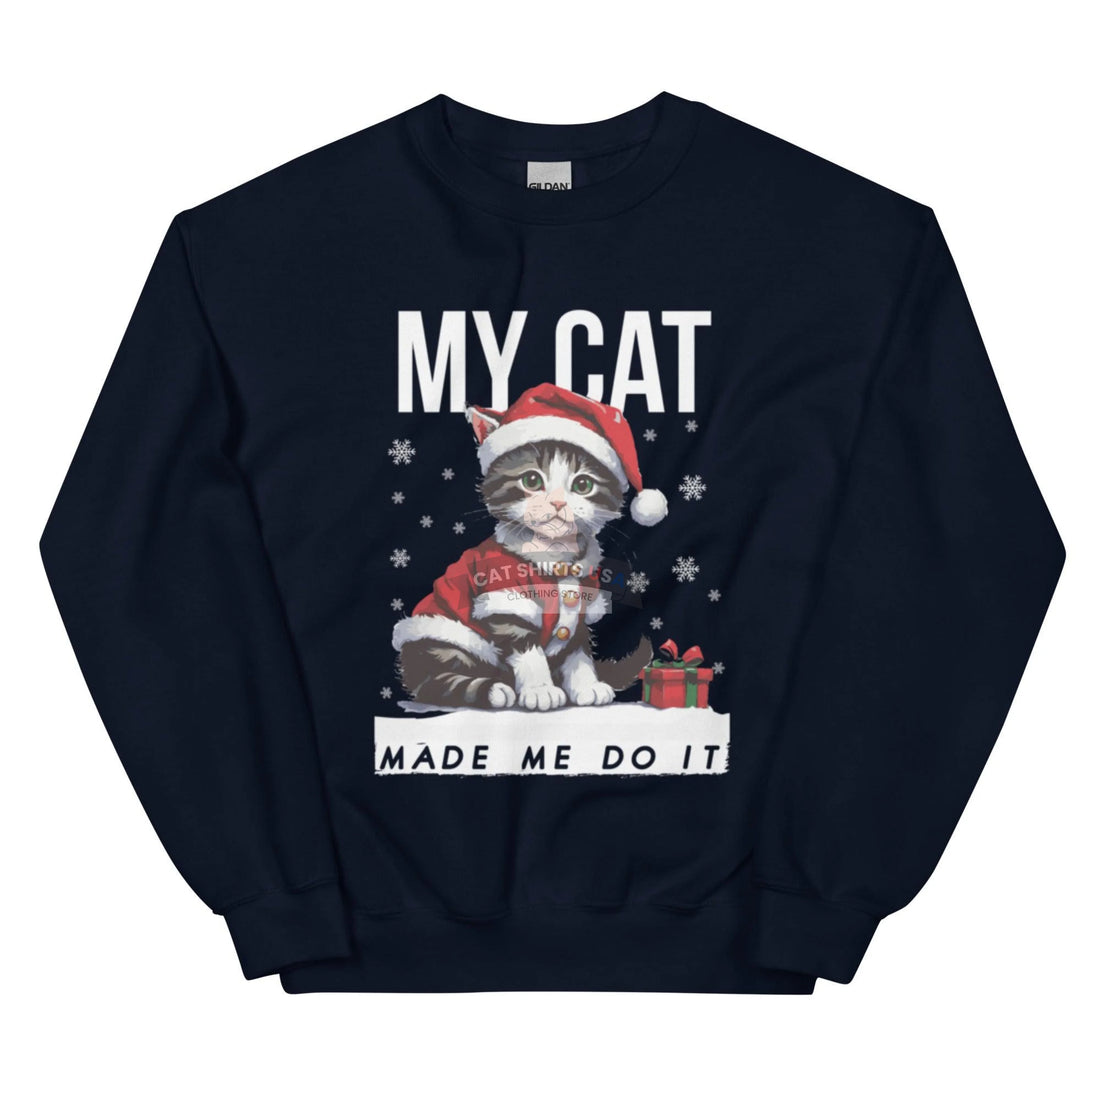 Made Me Do It Cat Sweatshirt - Cat Shirts USA